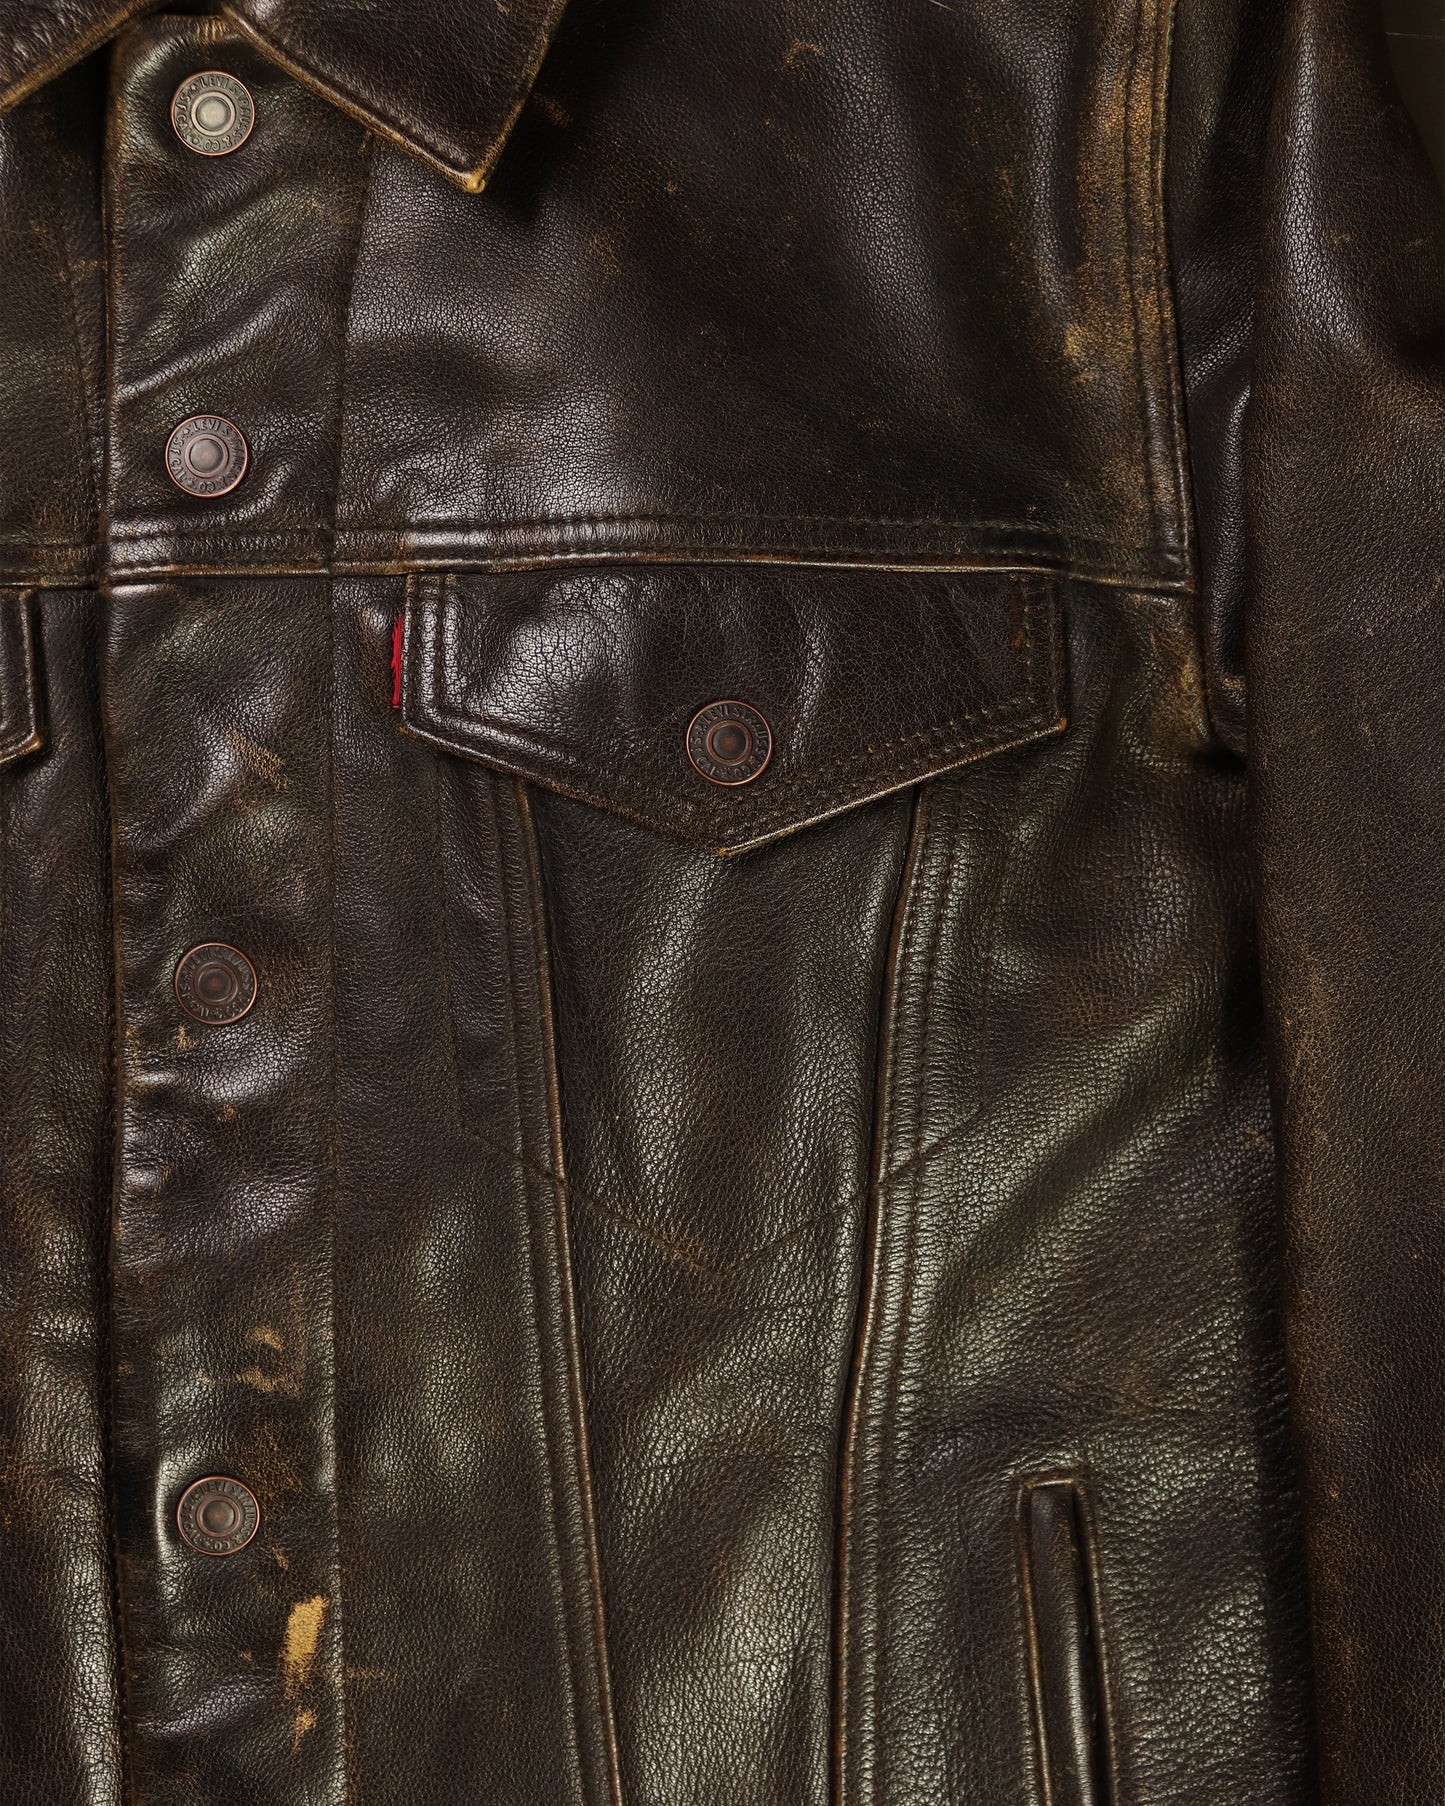 Levi’s buffalo leather trucker jacket